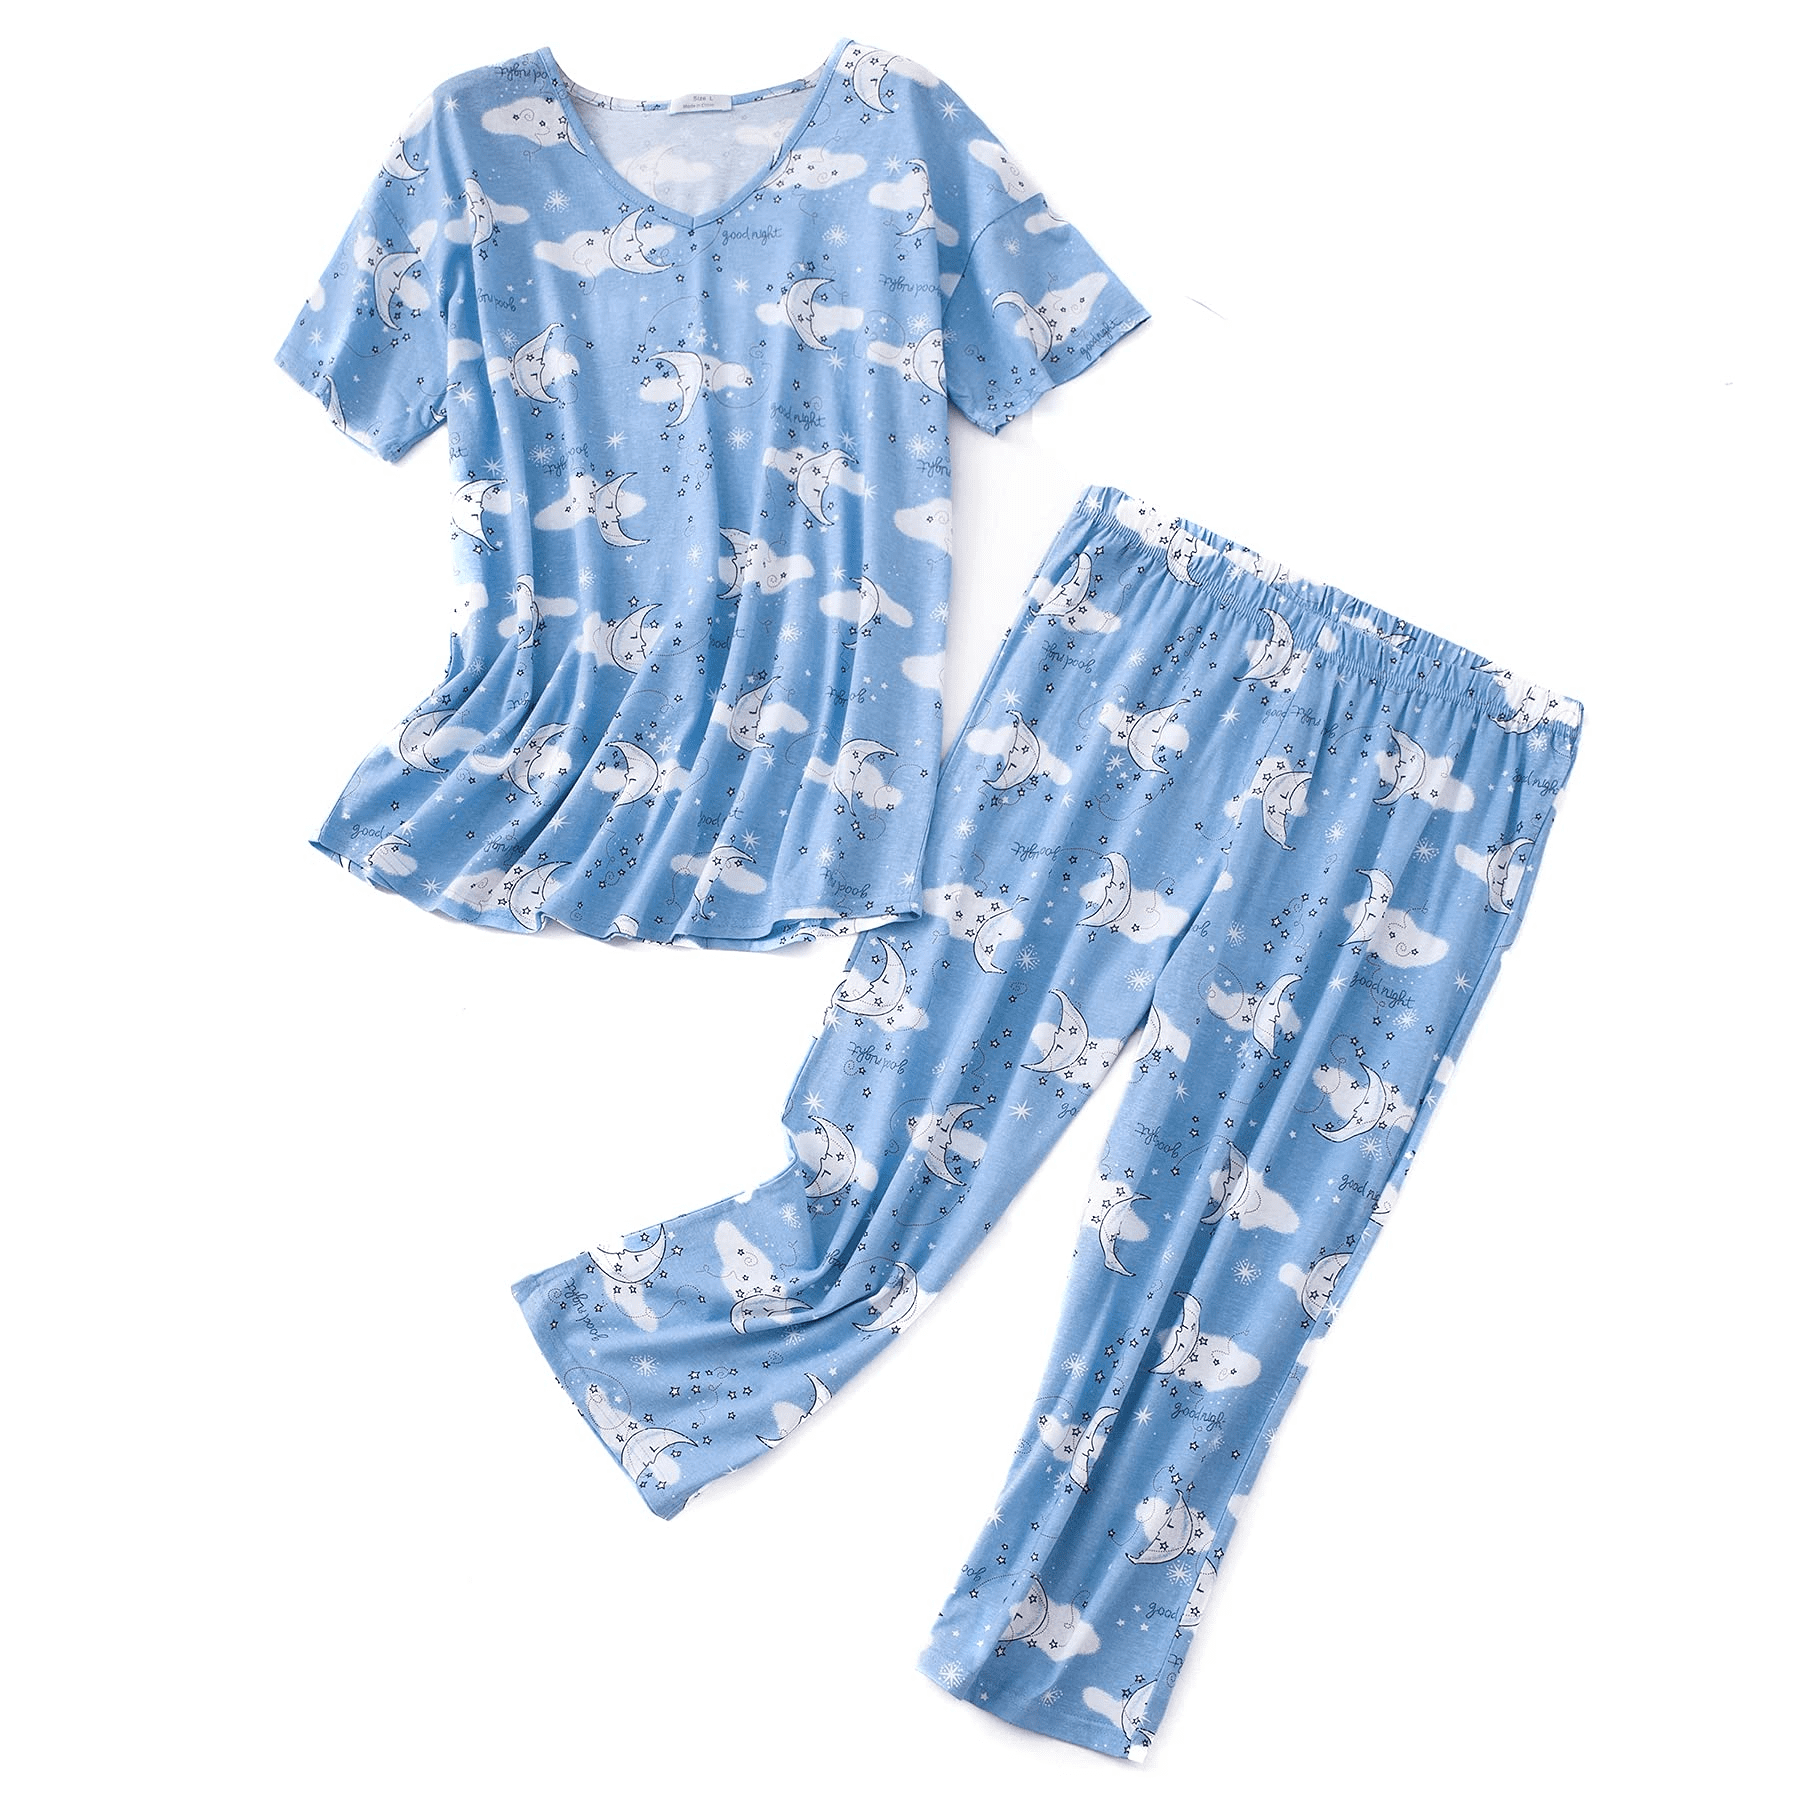 Zando Womens Short Sleeve Pajama Sets for Women Soft Sleepwear Tops ...